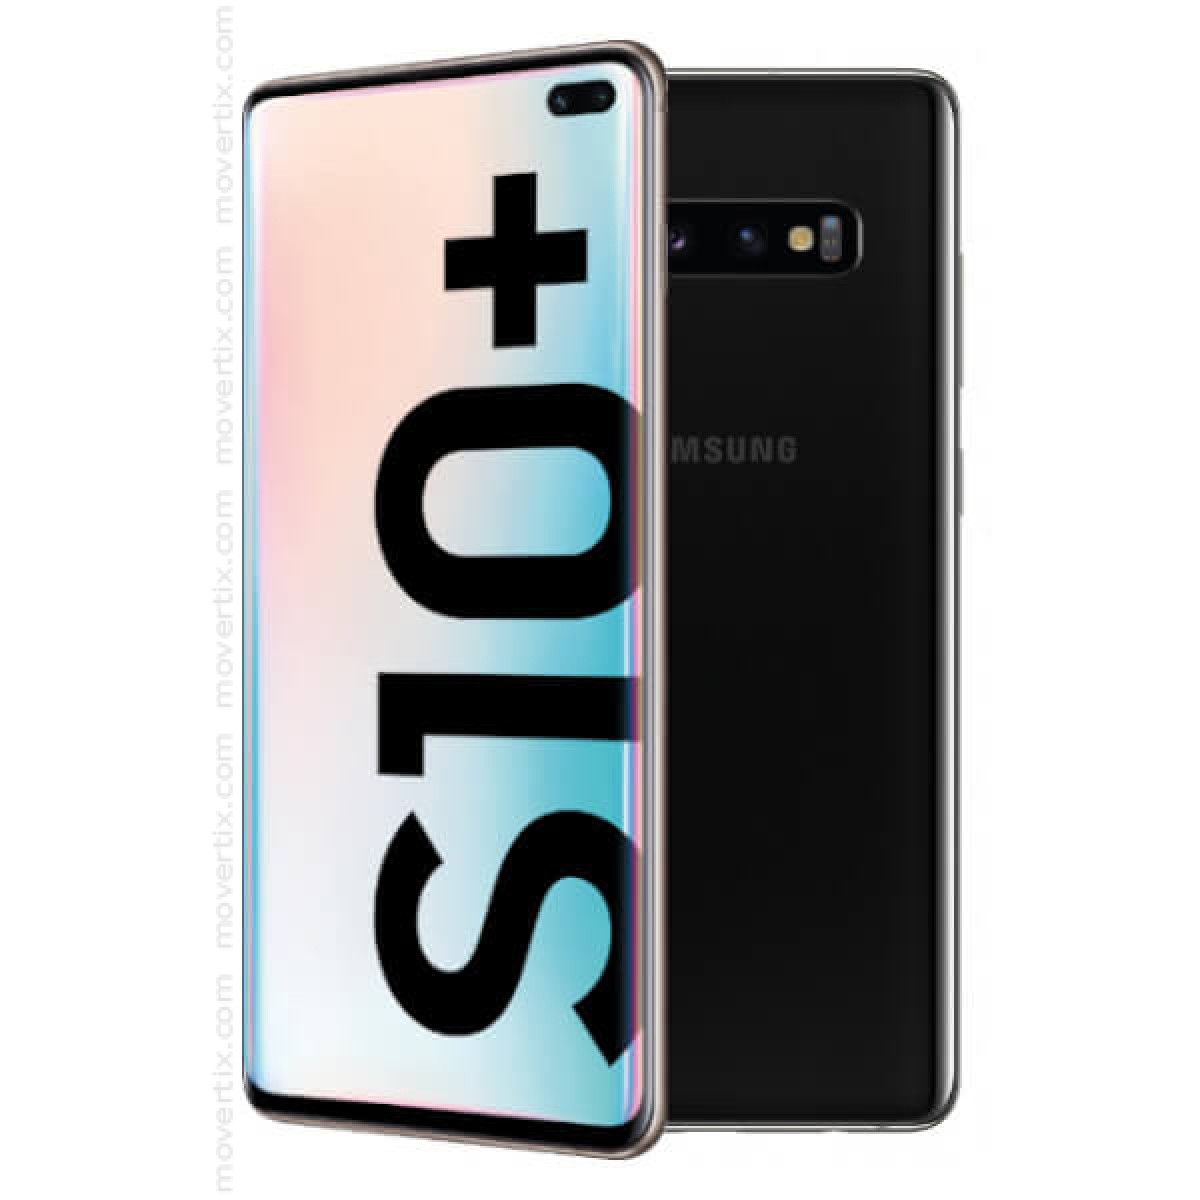 Samsung Galaxy S10 Plus Dual Sim Prism Black 128gb And 8gb Ram